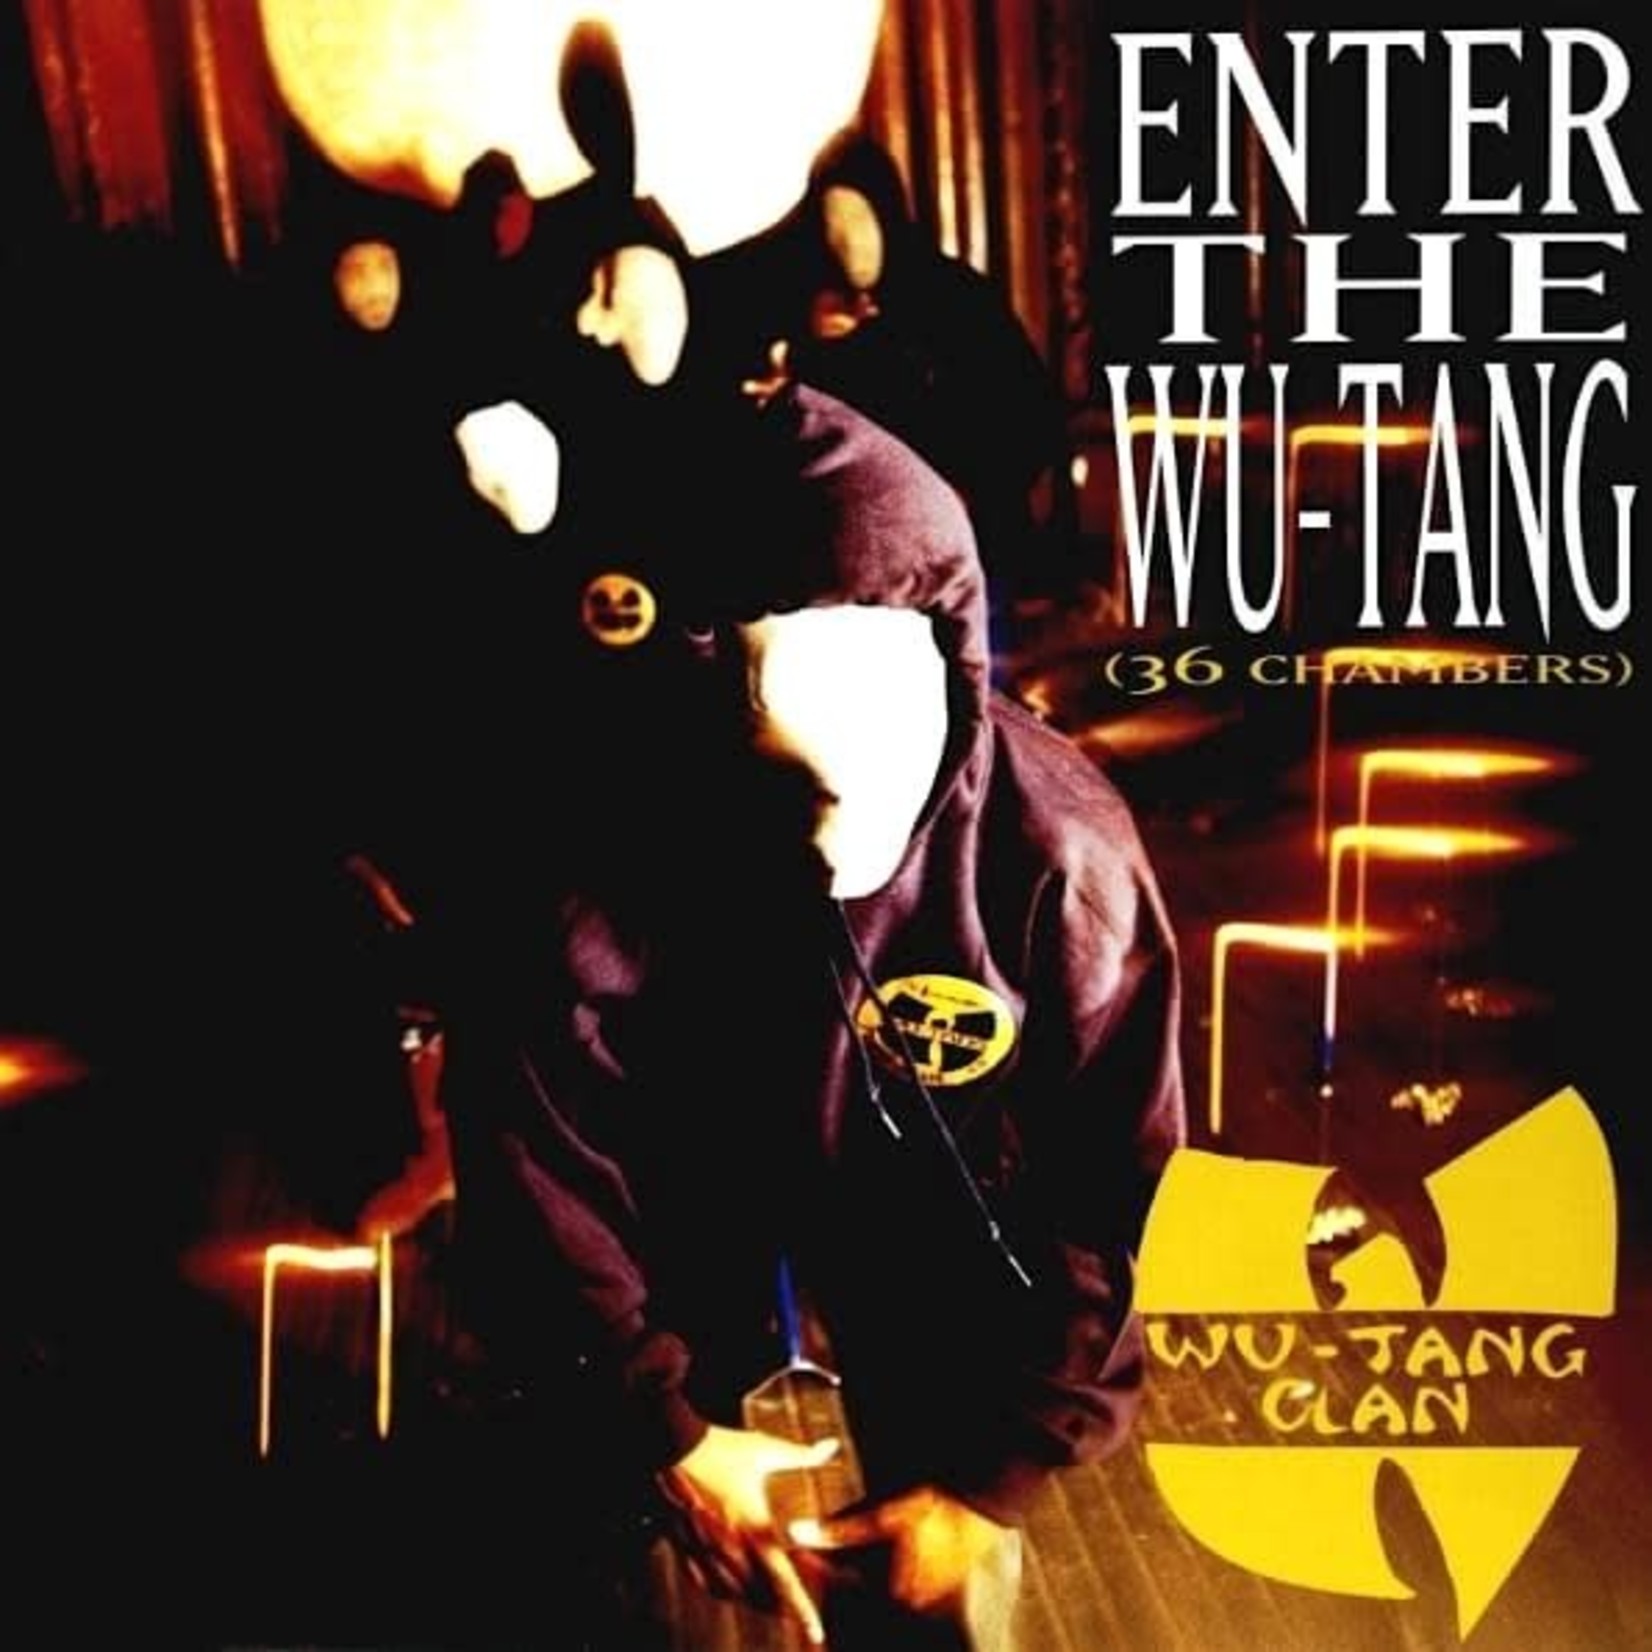 [New] Wu-Tang Clan - Enter The Wu-Tang (36 Chambers)